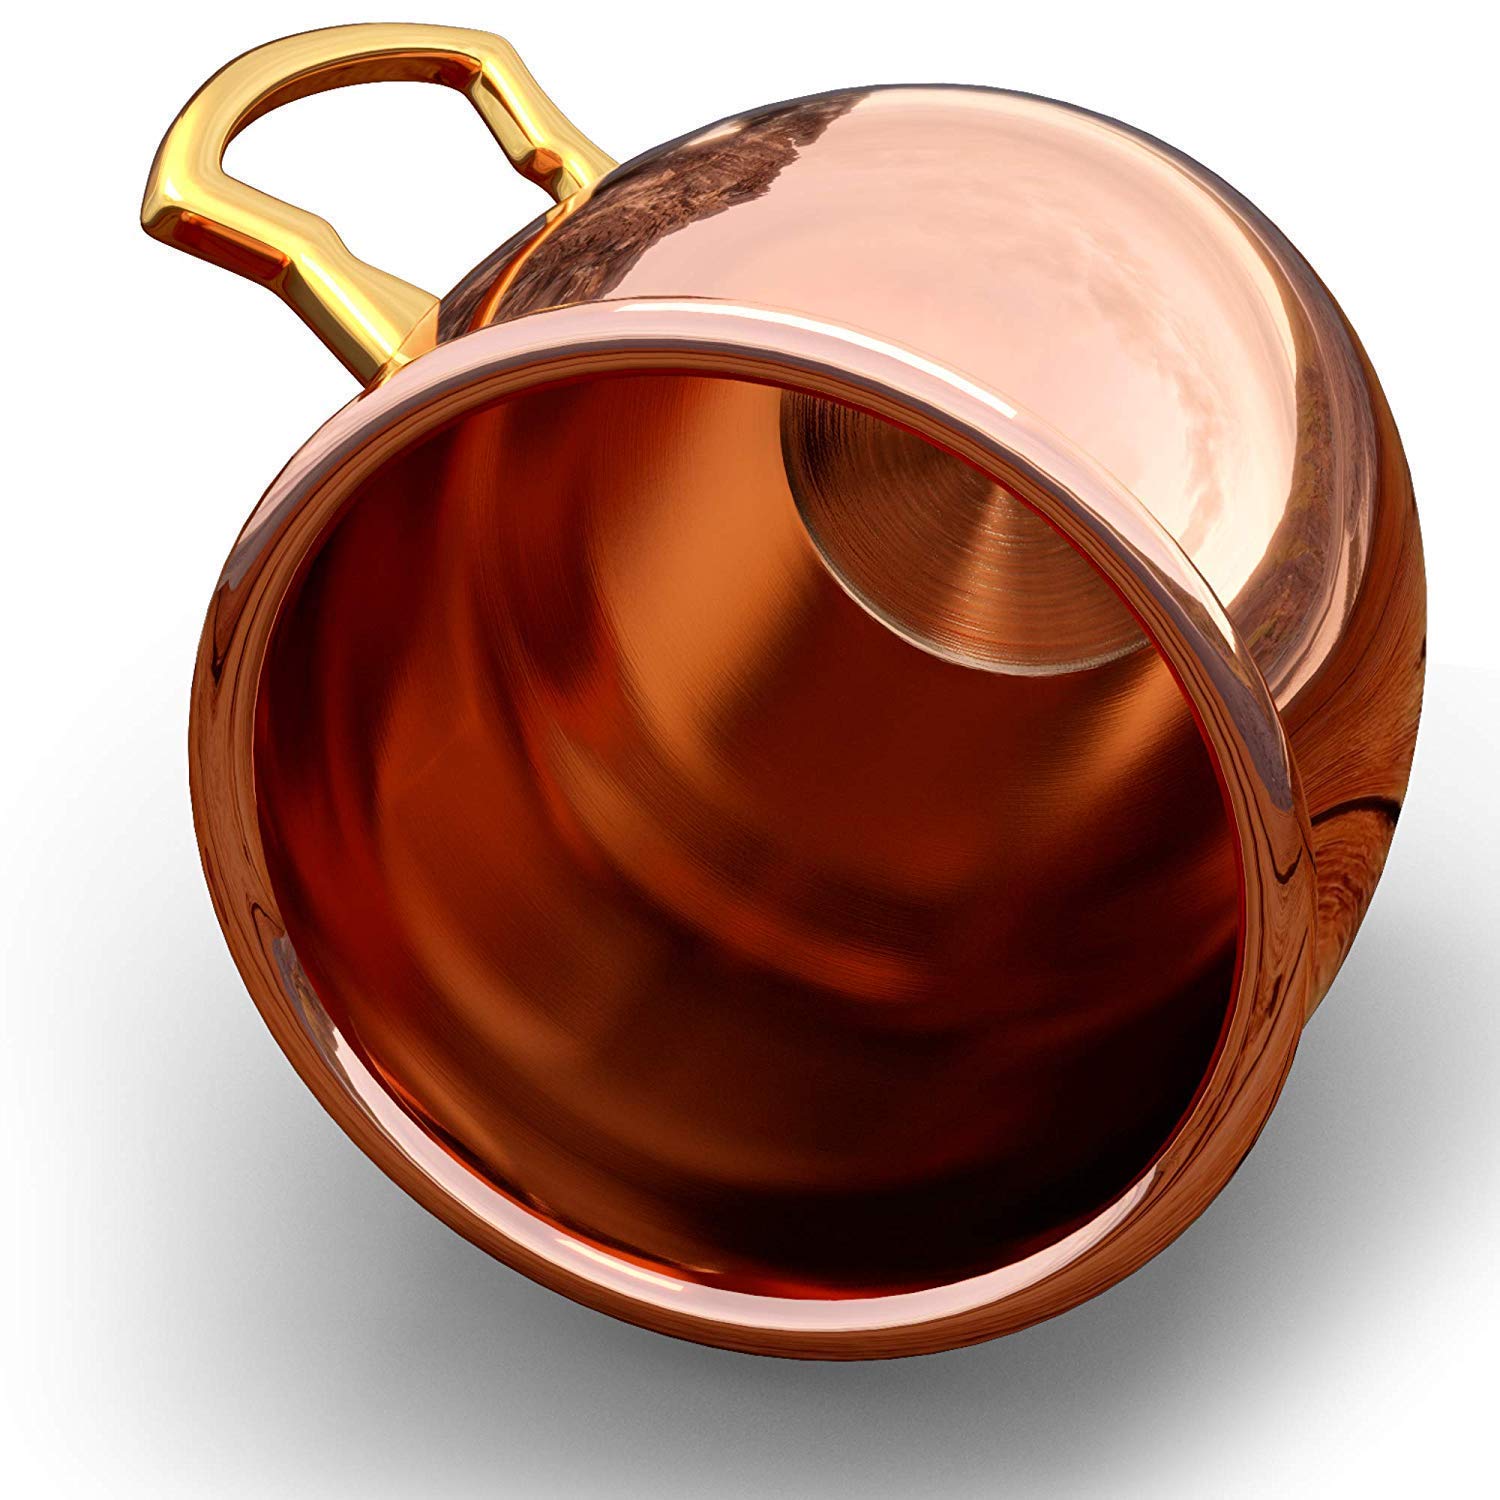 Pure copper Moscow mule mug 18 oz- 450ml